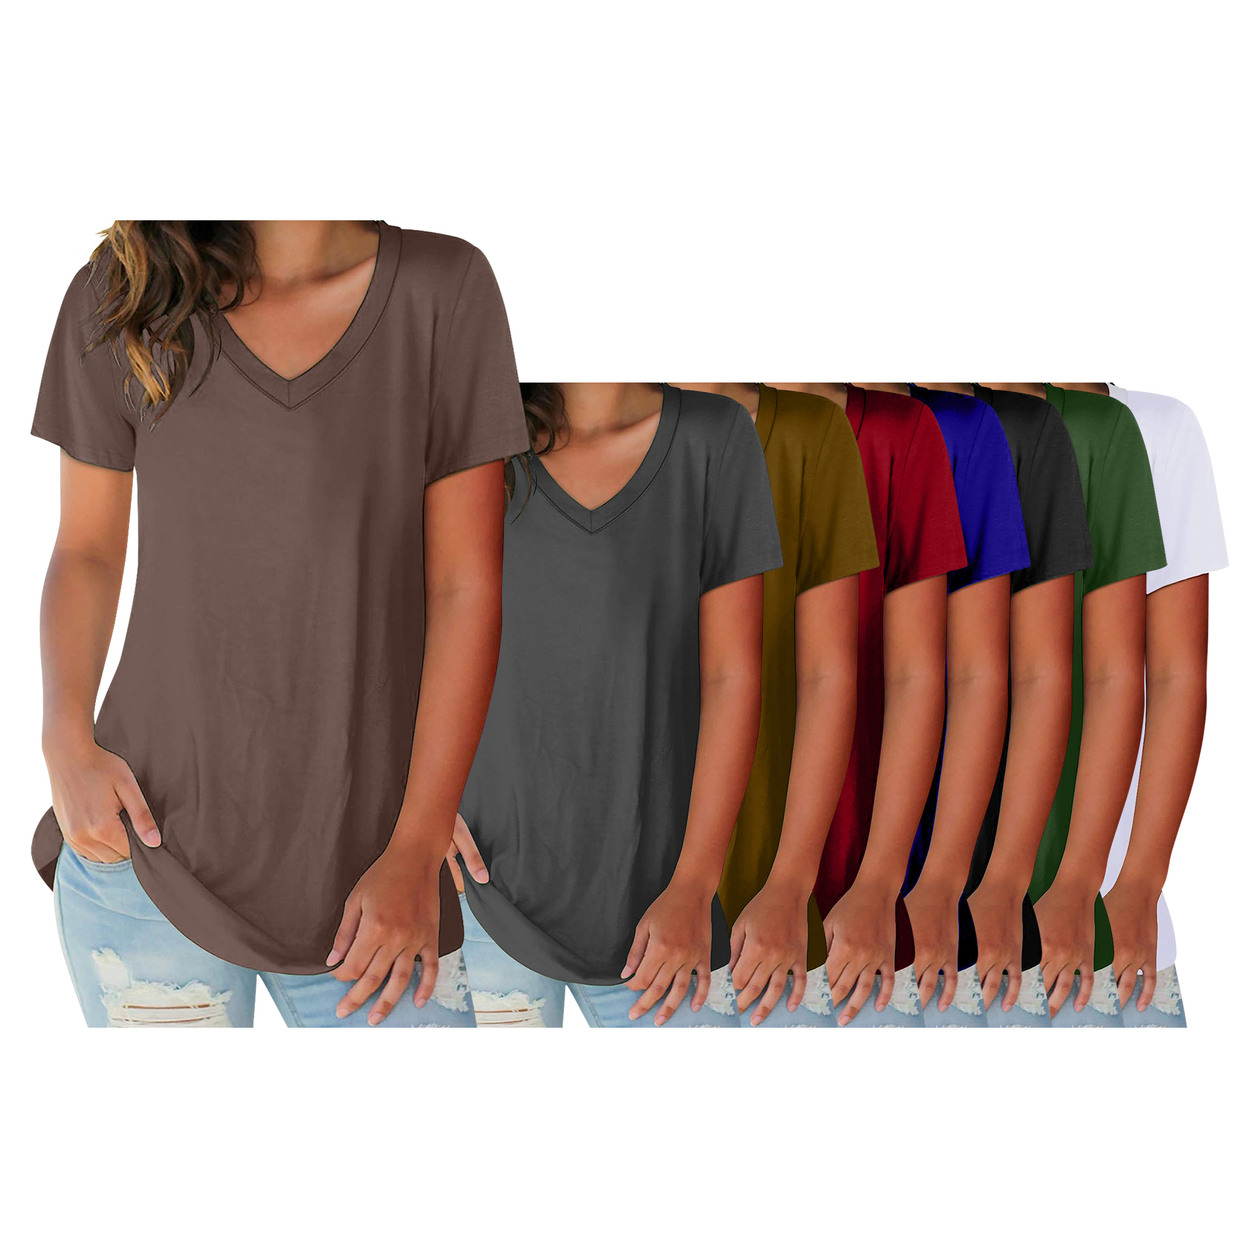 Women's Ultra-Soft Smooth Cotton Blend Basic V-Neck Short Sleeve Shirts - Red, Xx-large